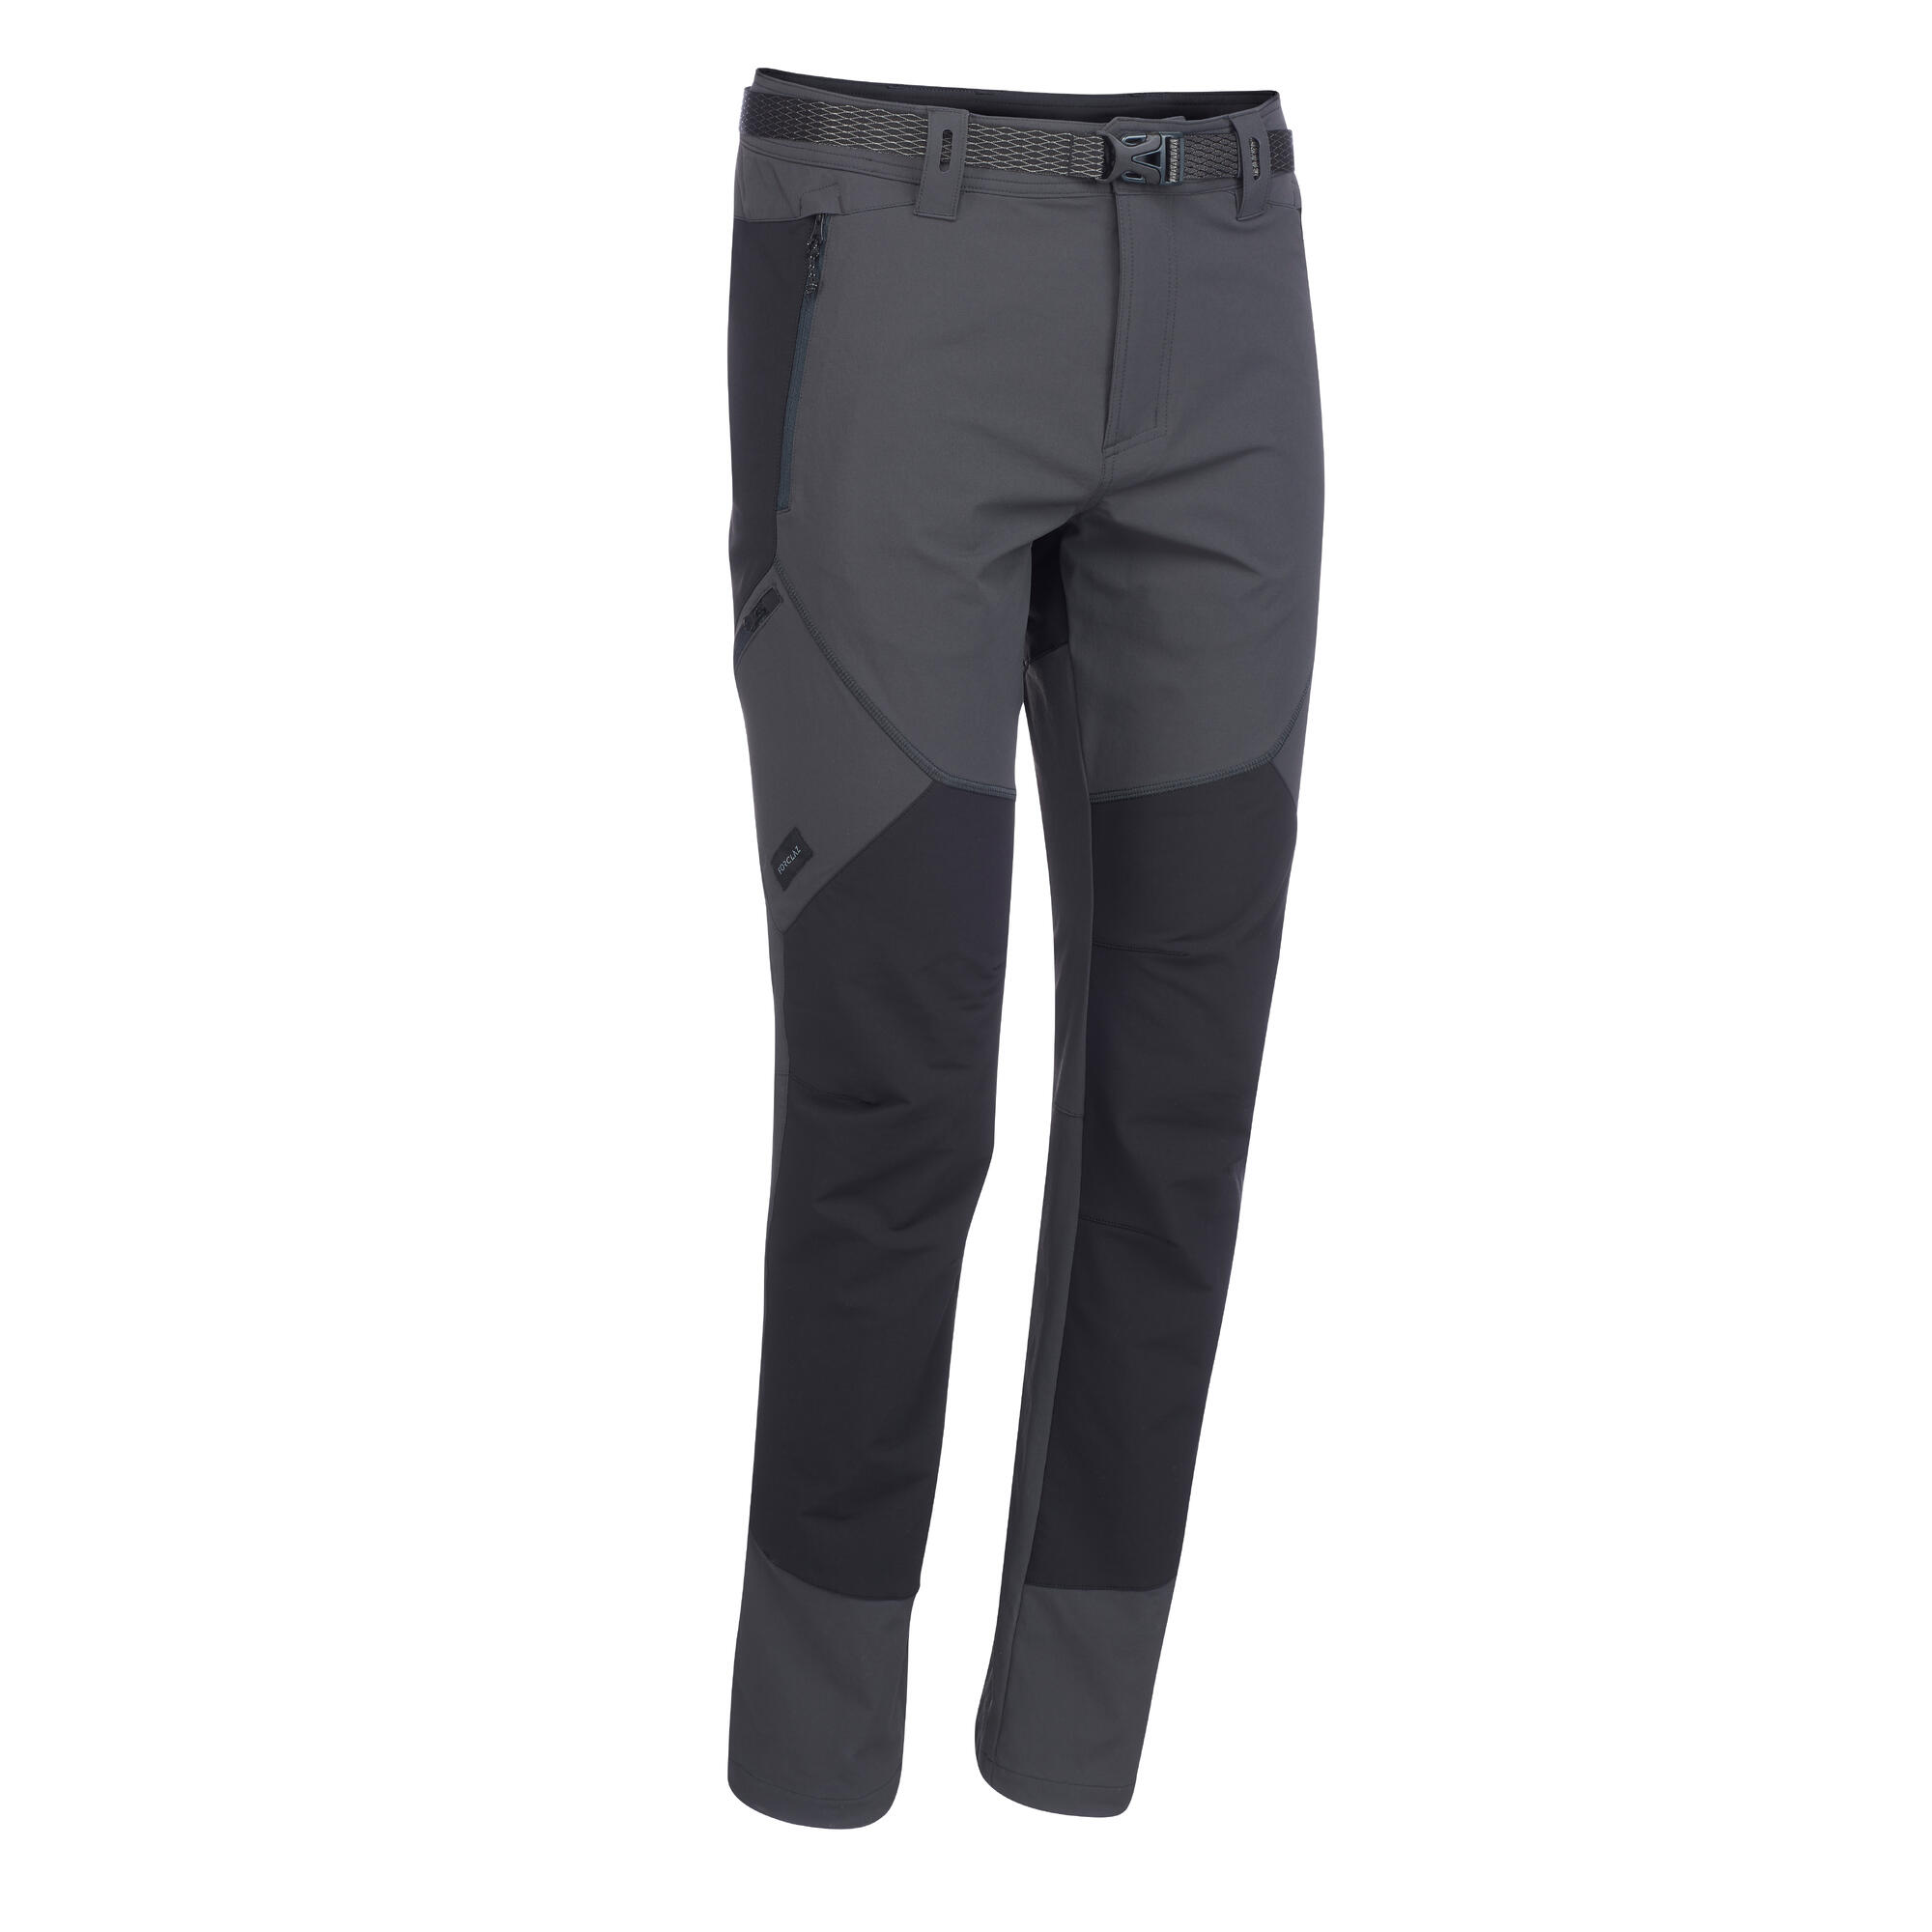 Men's mountain trekking trousers - TREK 900 - dark grey | forclaz